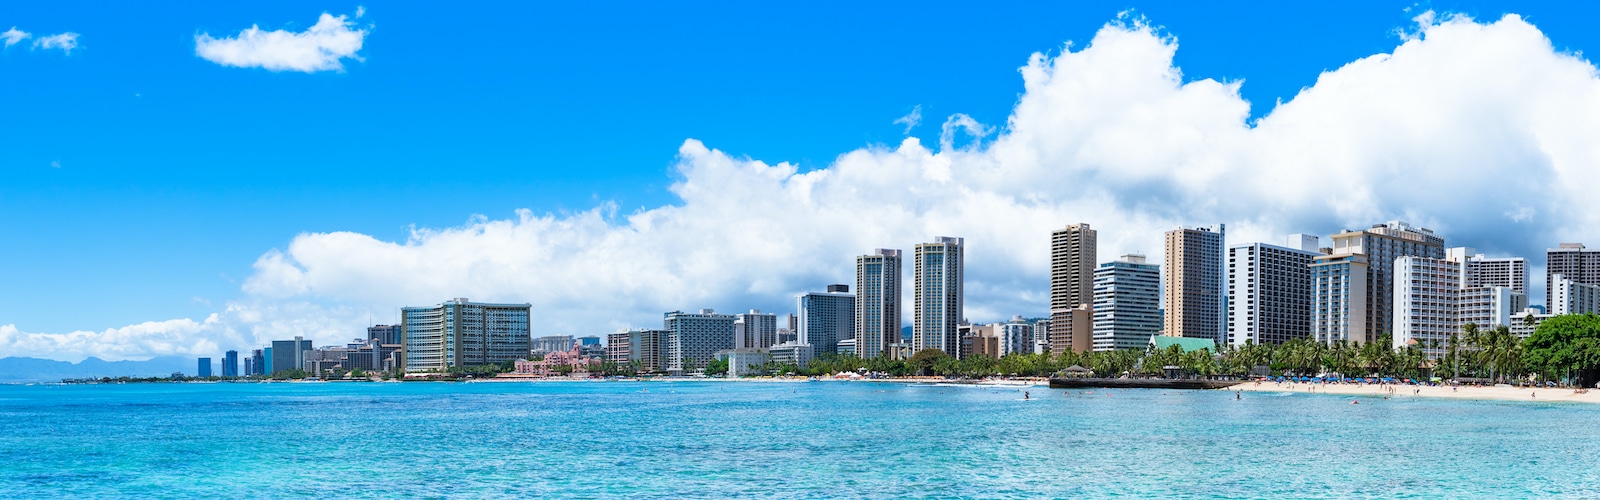 Best Areas to Stay in Waikiki, About Waikiki, Oahu, Hawaii